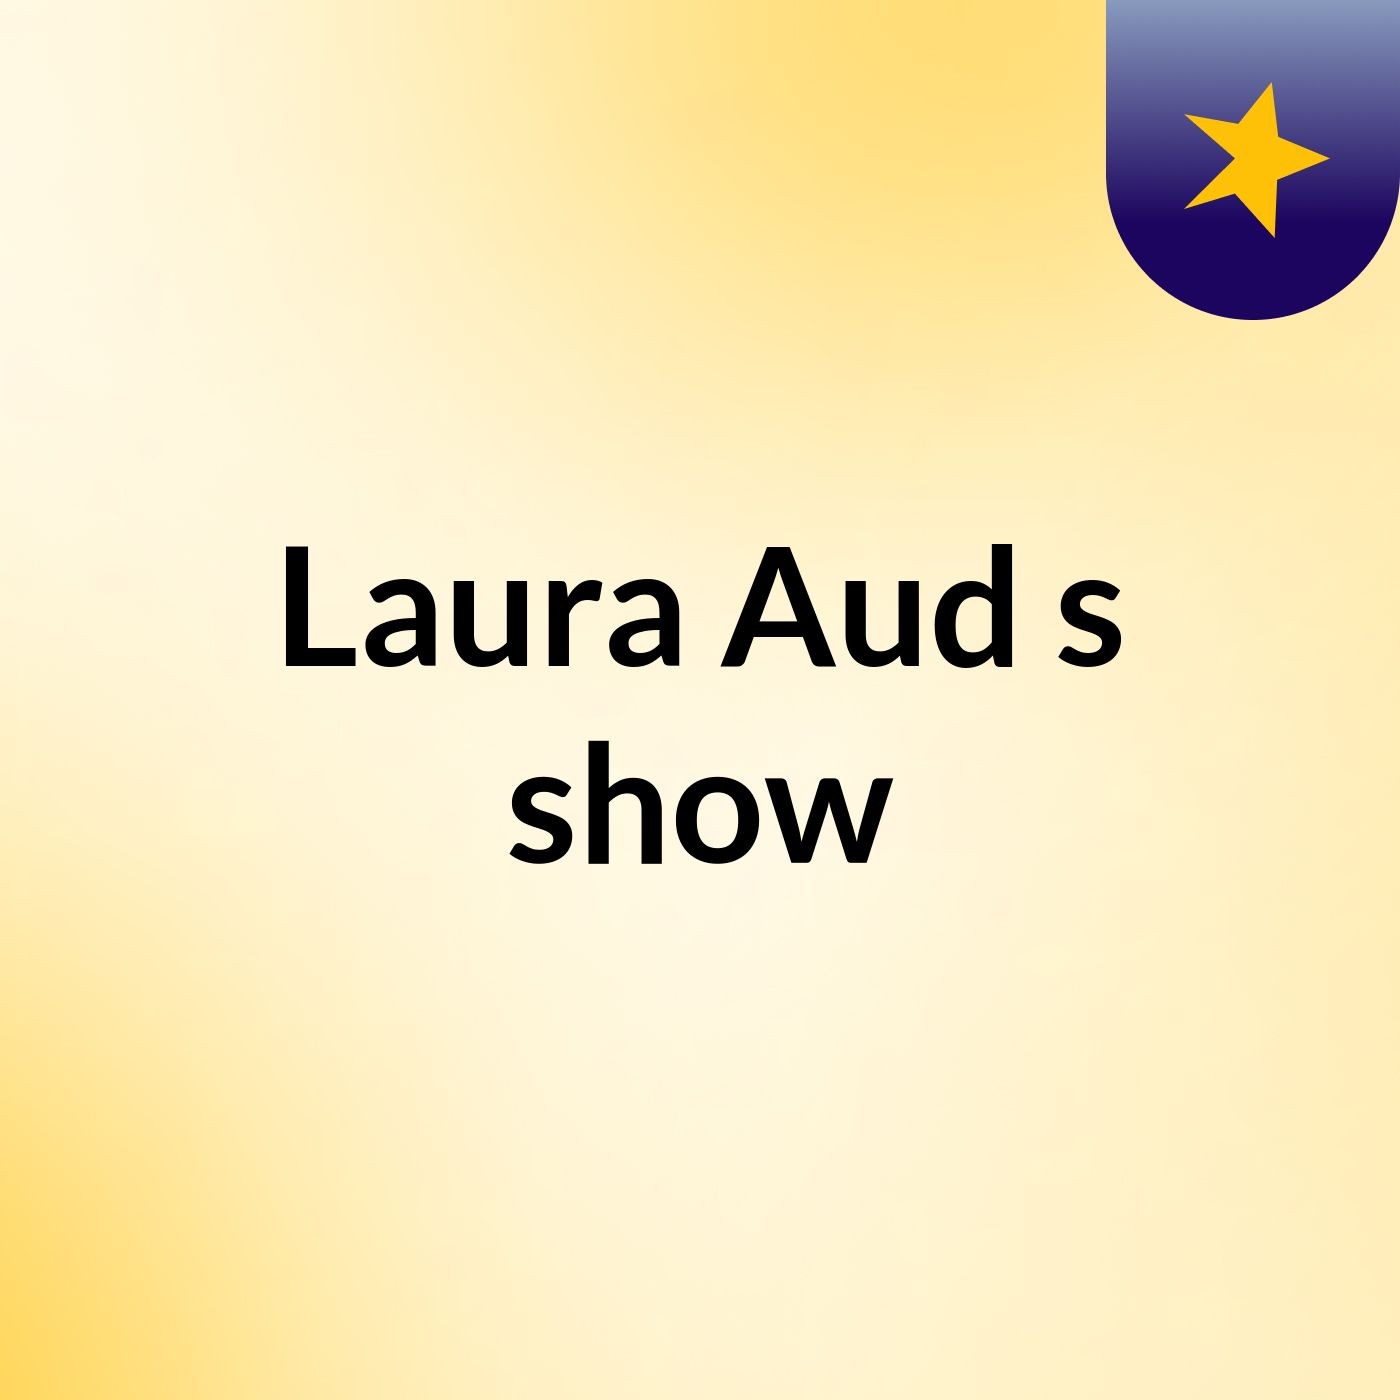 Laura Aud's show